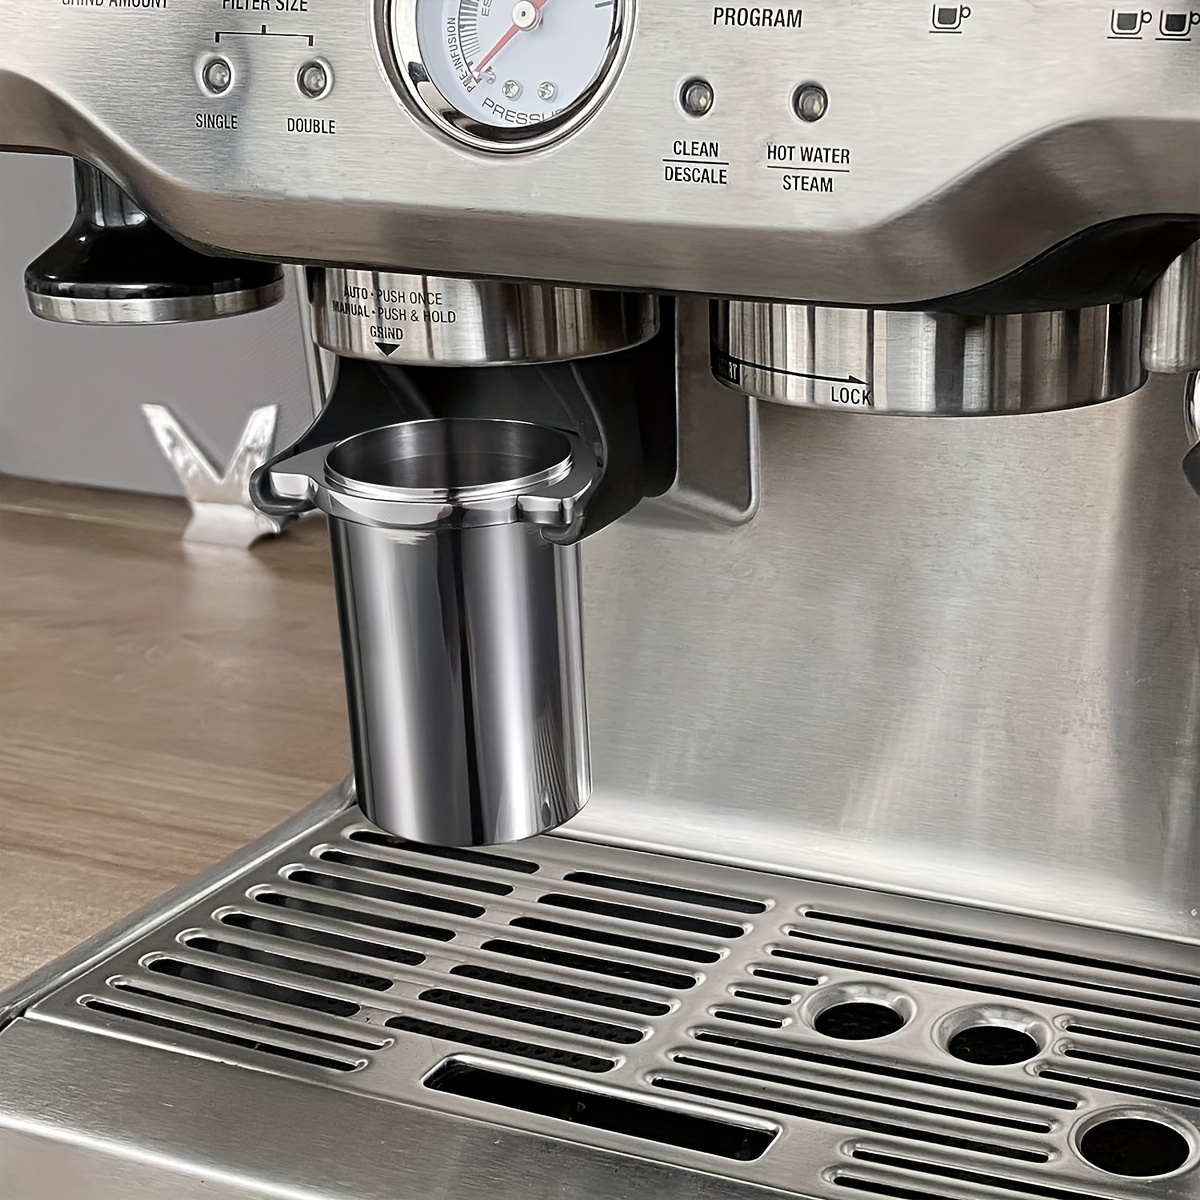 Breville Barista Express Stainless Steel Espresso Machine with